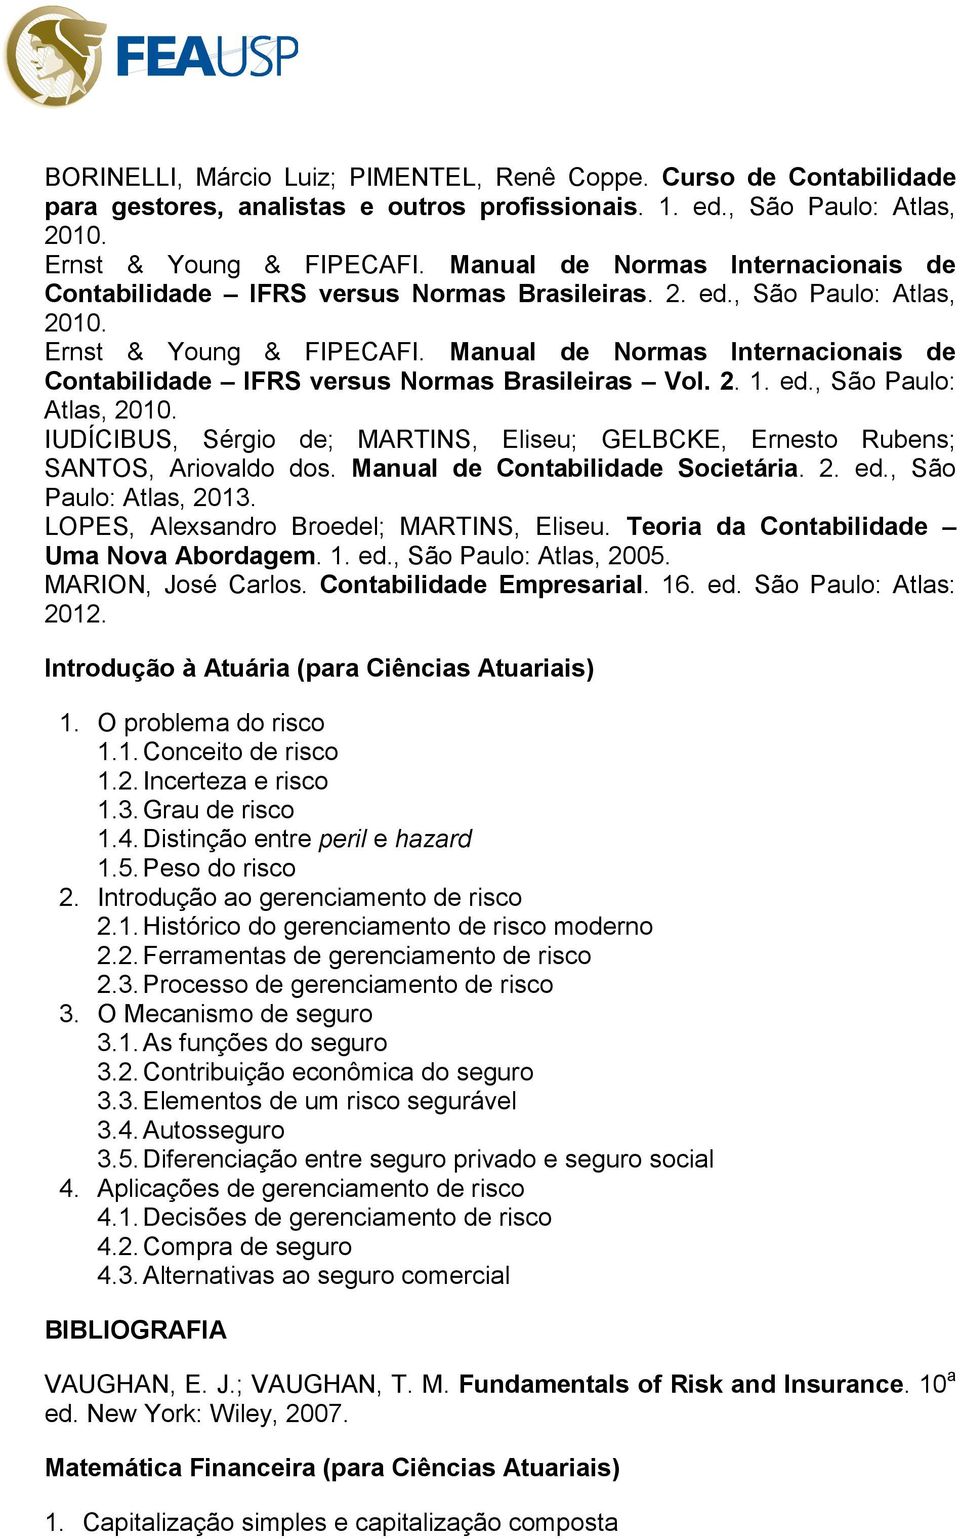 Manual de Normas Internacionais de Contabilidade IFRS versus Normas Brasileiras Vol. 2. 1. ed., São Paulo: Atlas, 2010.